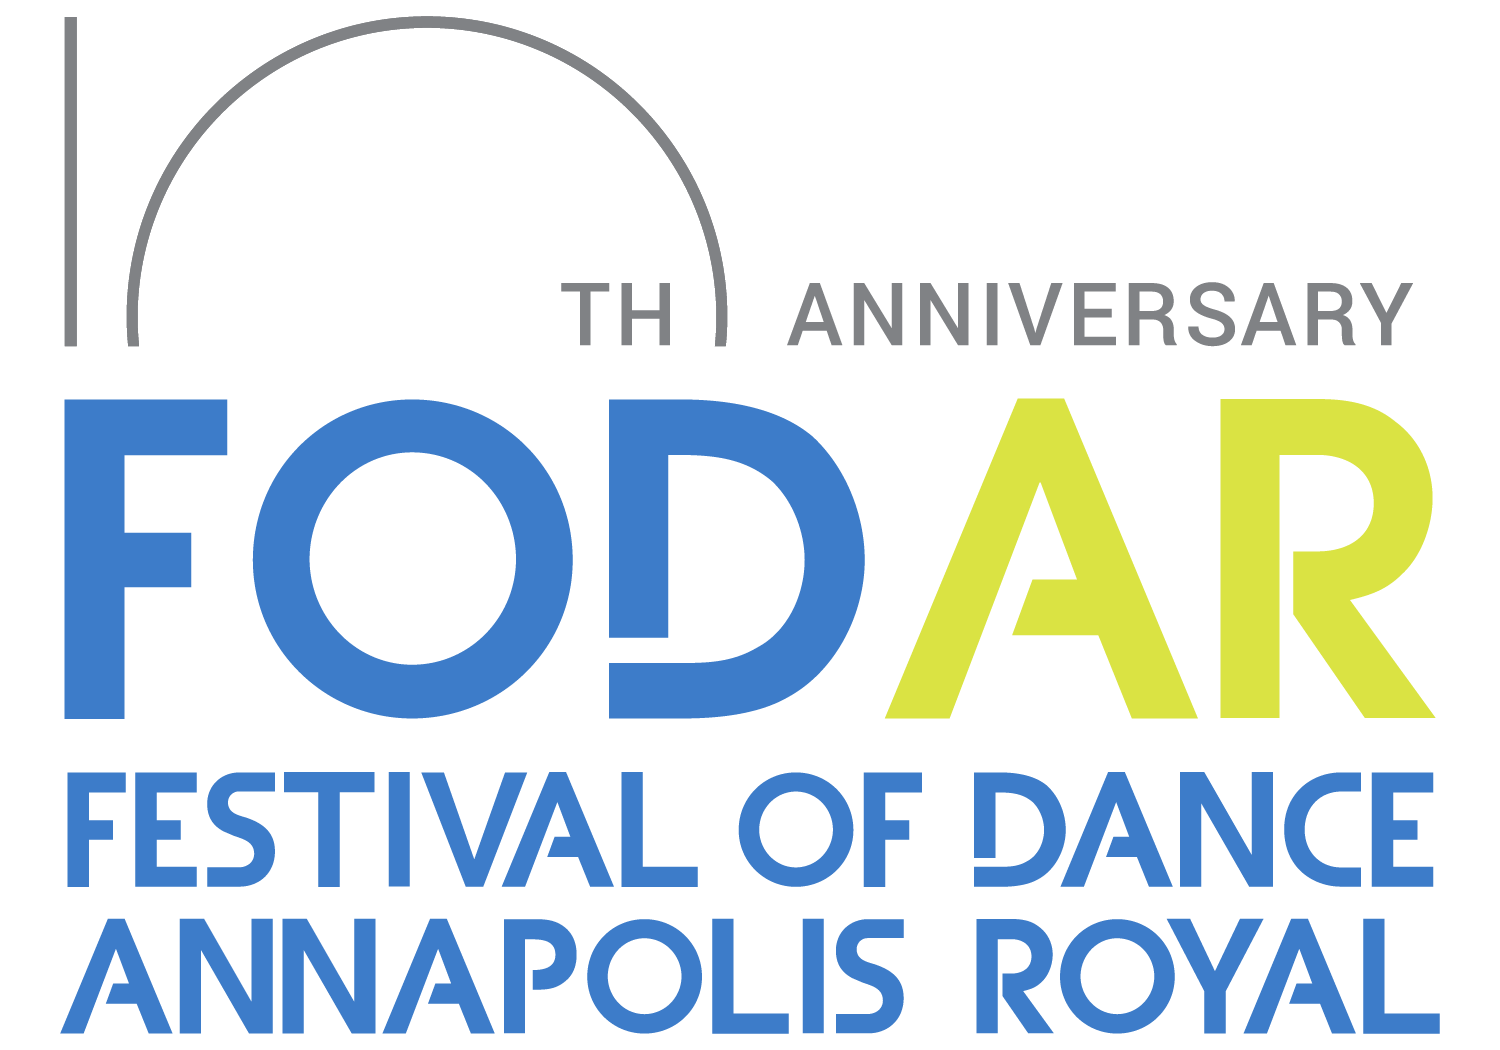 Festival of Dance Annapolis Royal